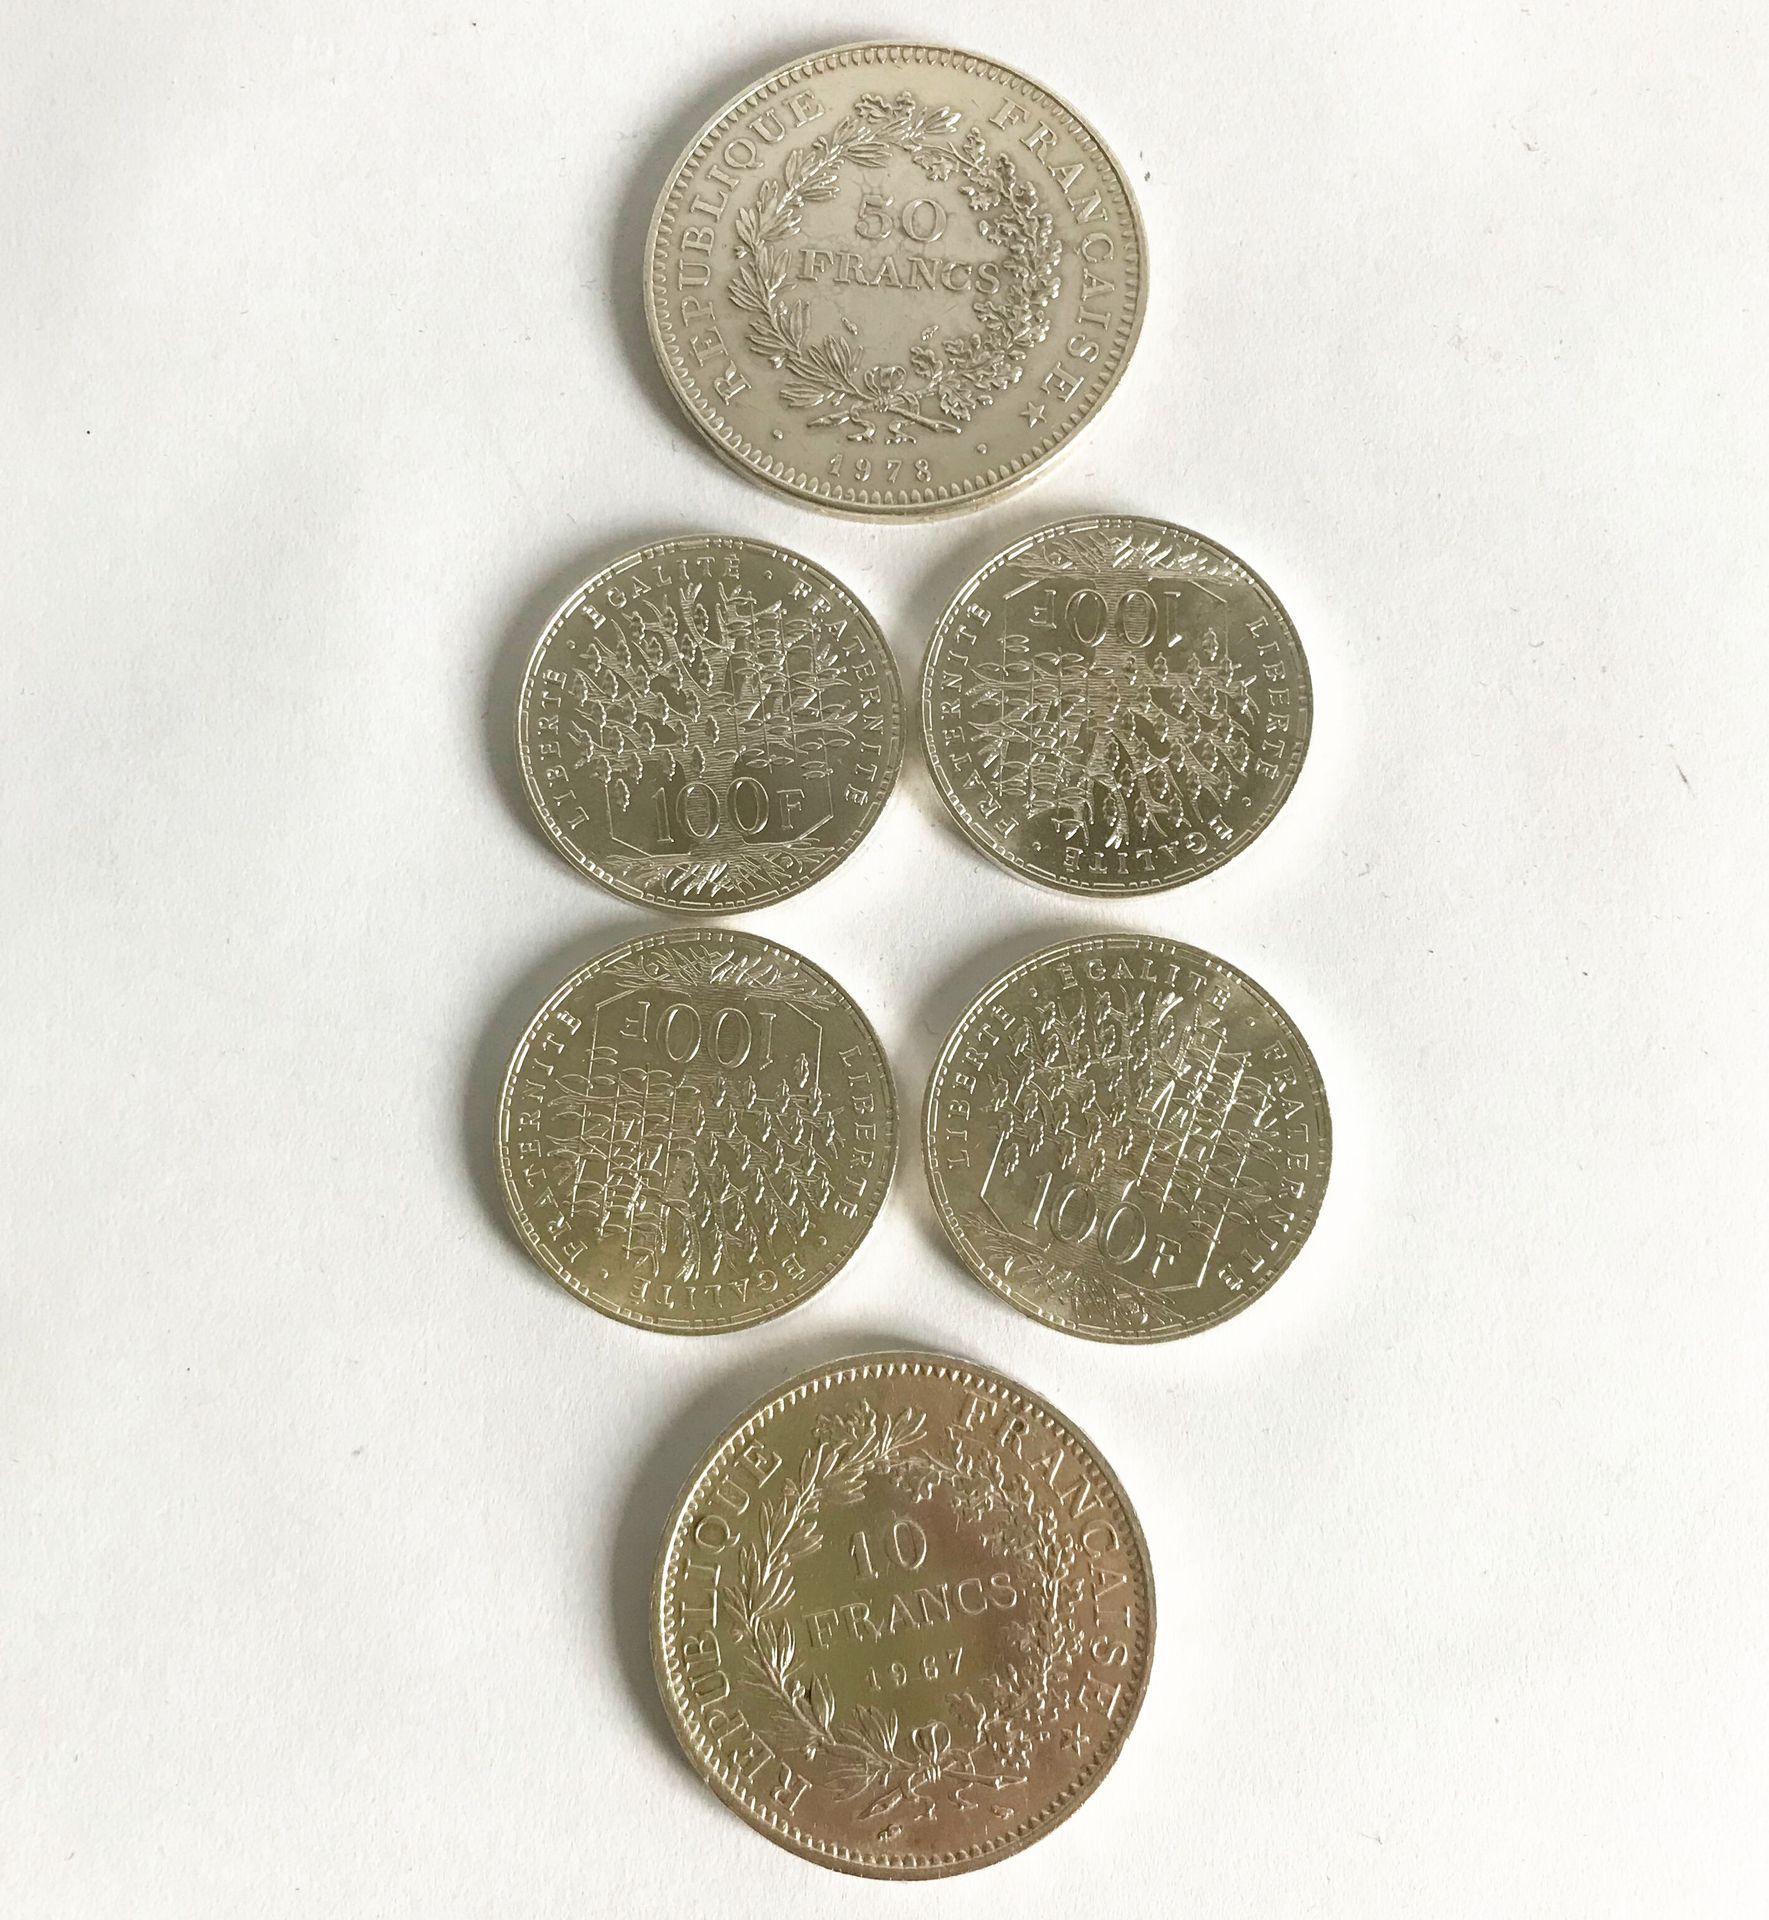 Null 银币套装包括: 
- 4枚100法郎的万神殿硬币，1982年
- 1枚50法郎的硬币 
- 1枚10法郎的硬币
重量：115.50克